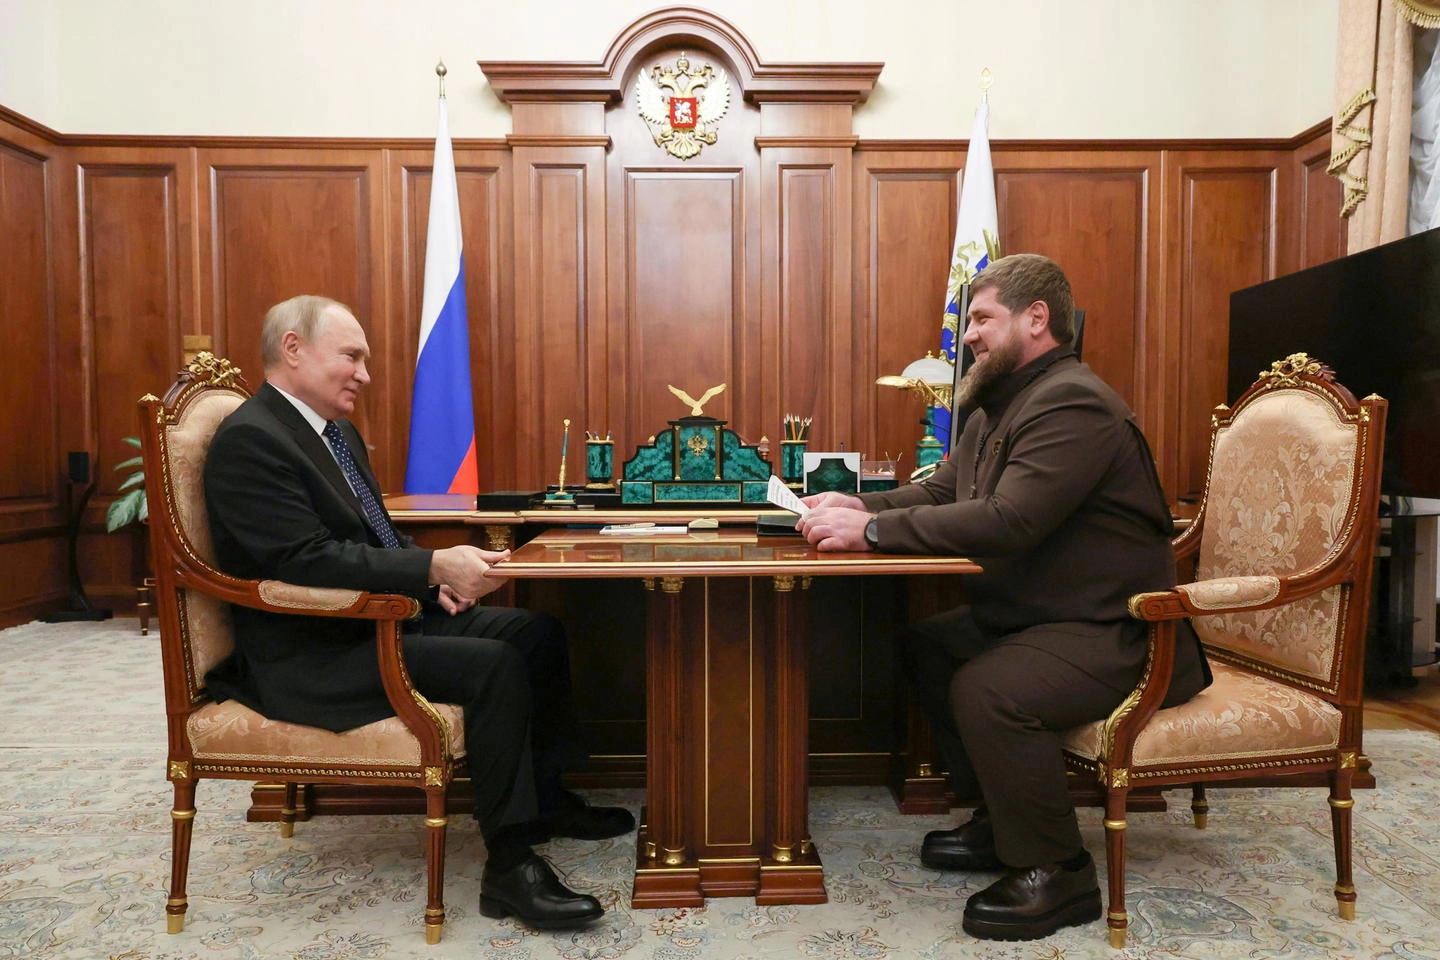  Vladimir Putin e Ramzan Kadyrov (foto Ansa)